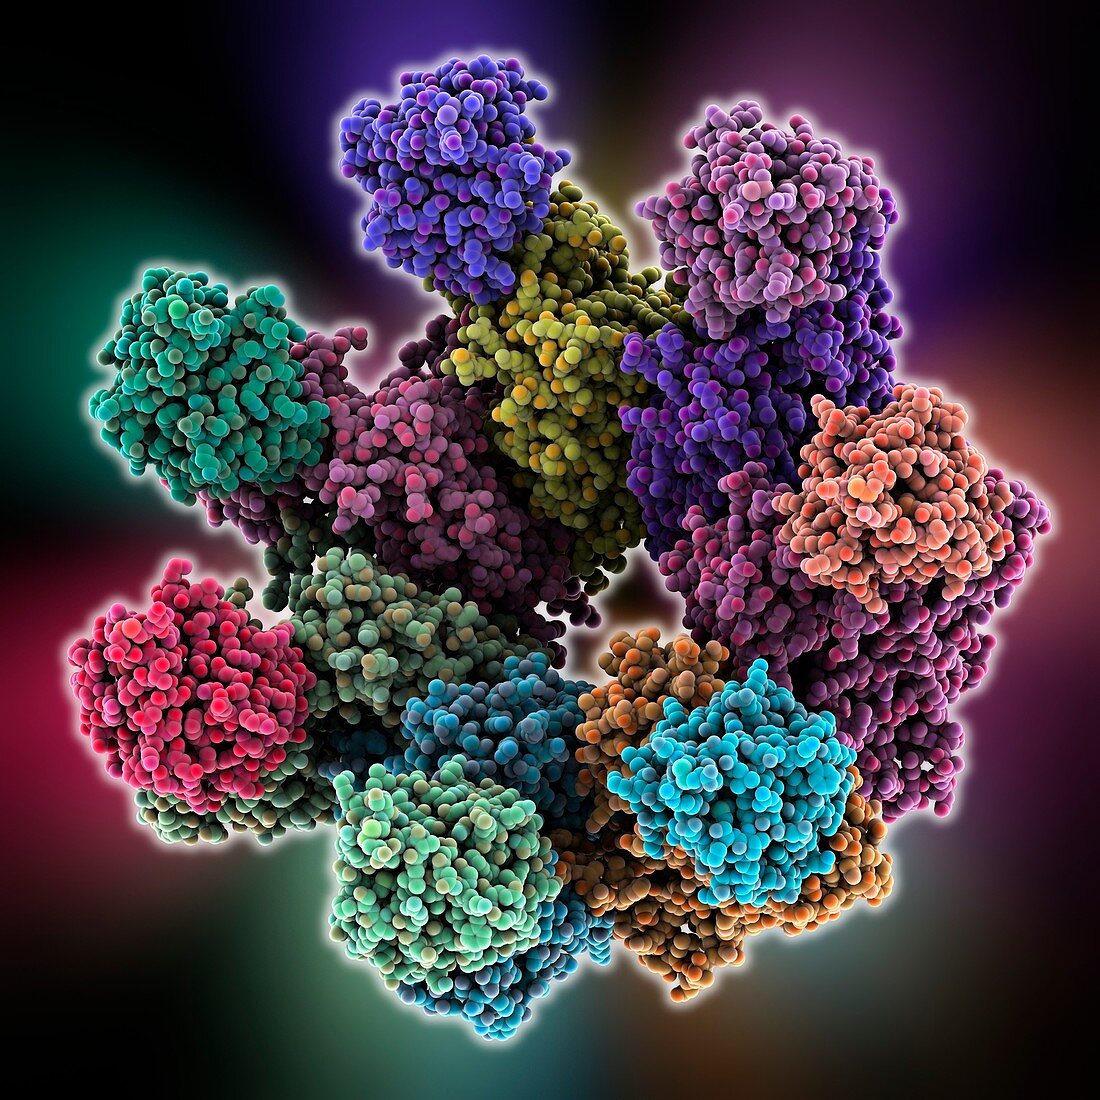 Anthrax toxin prepore,molecular model